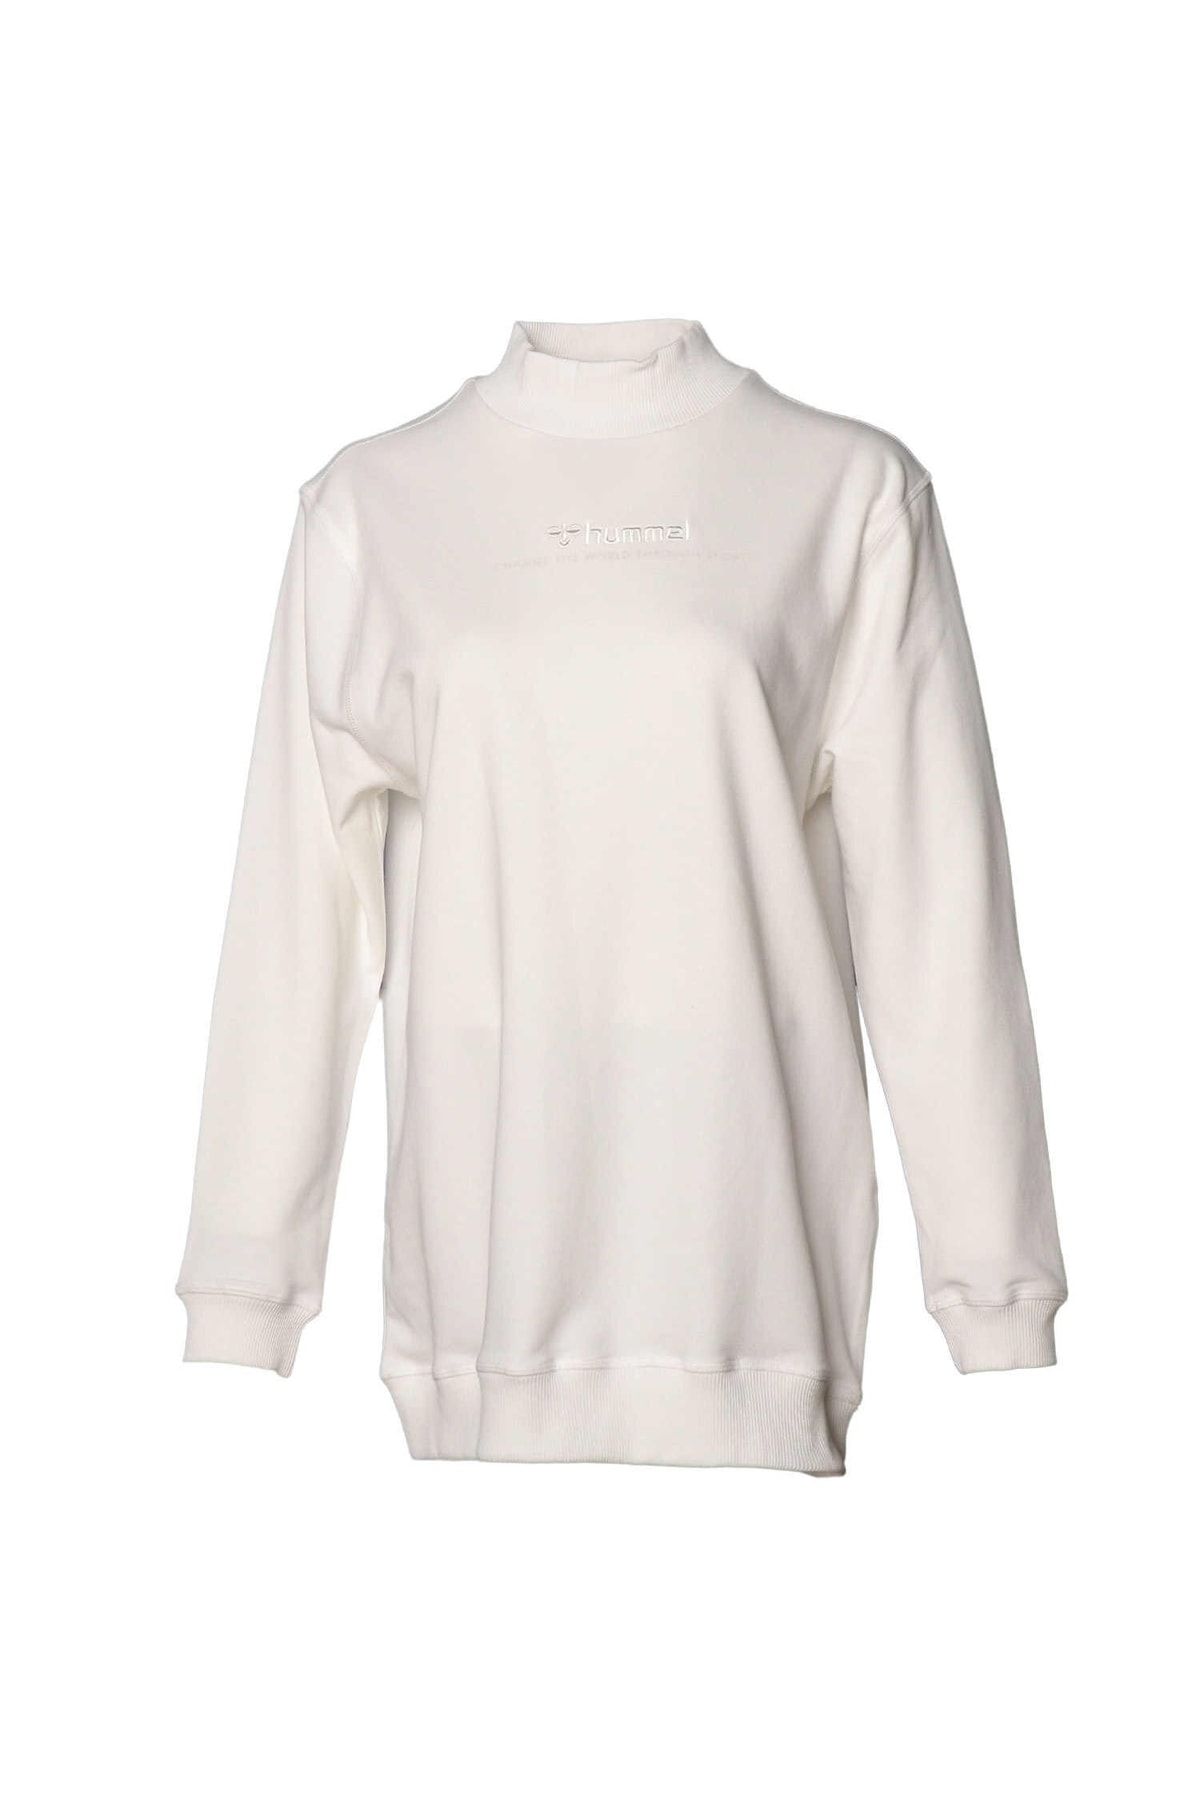 hummel Kadın Sumatra Sweatshirt-beyaz 921546-9003